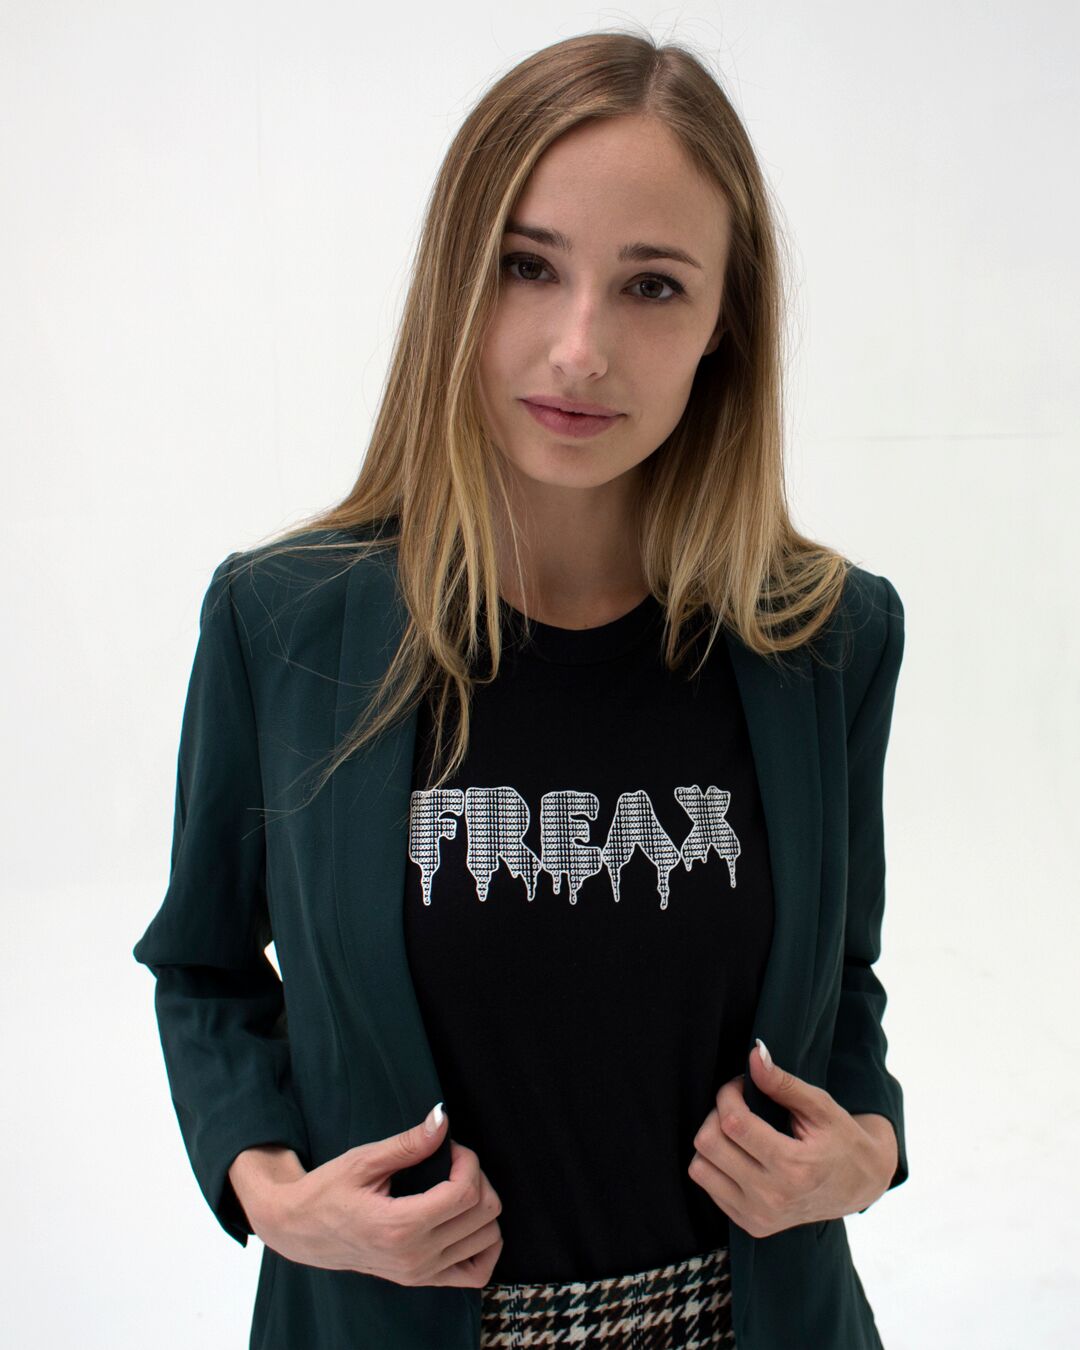 t. Weeyn FREAX Linux inspired with flowing binary code inside women's black t shirt work attire